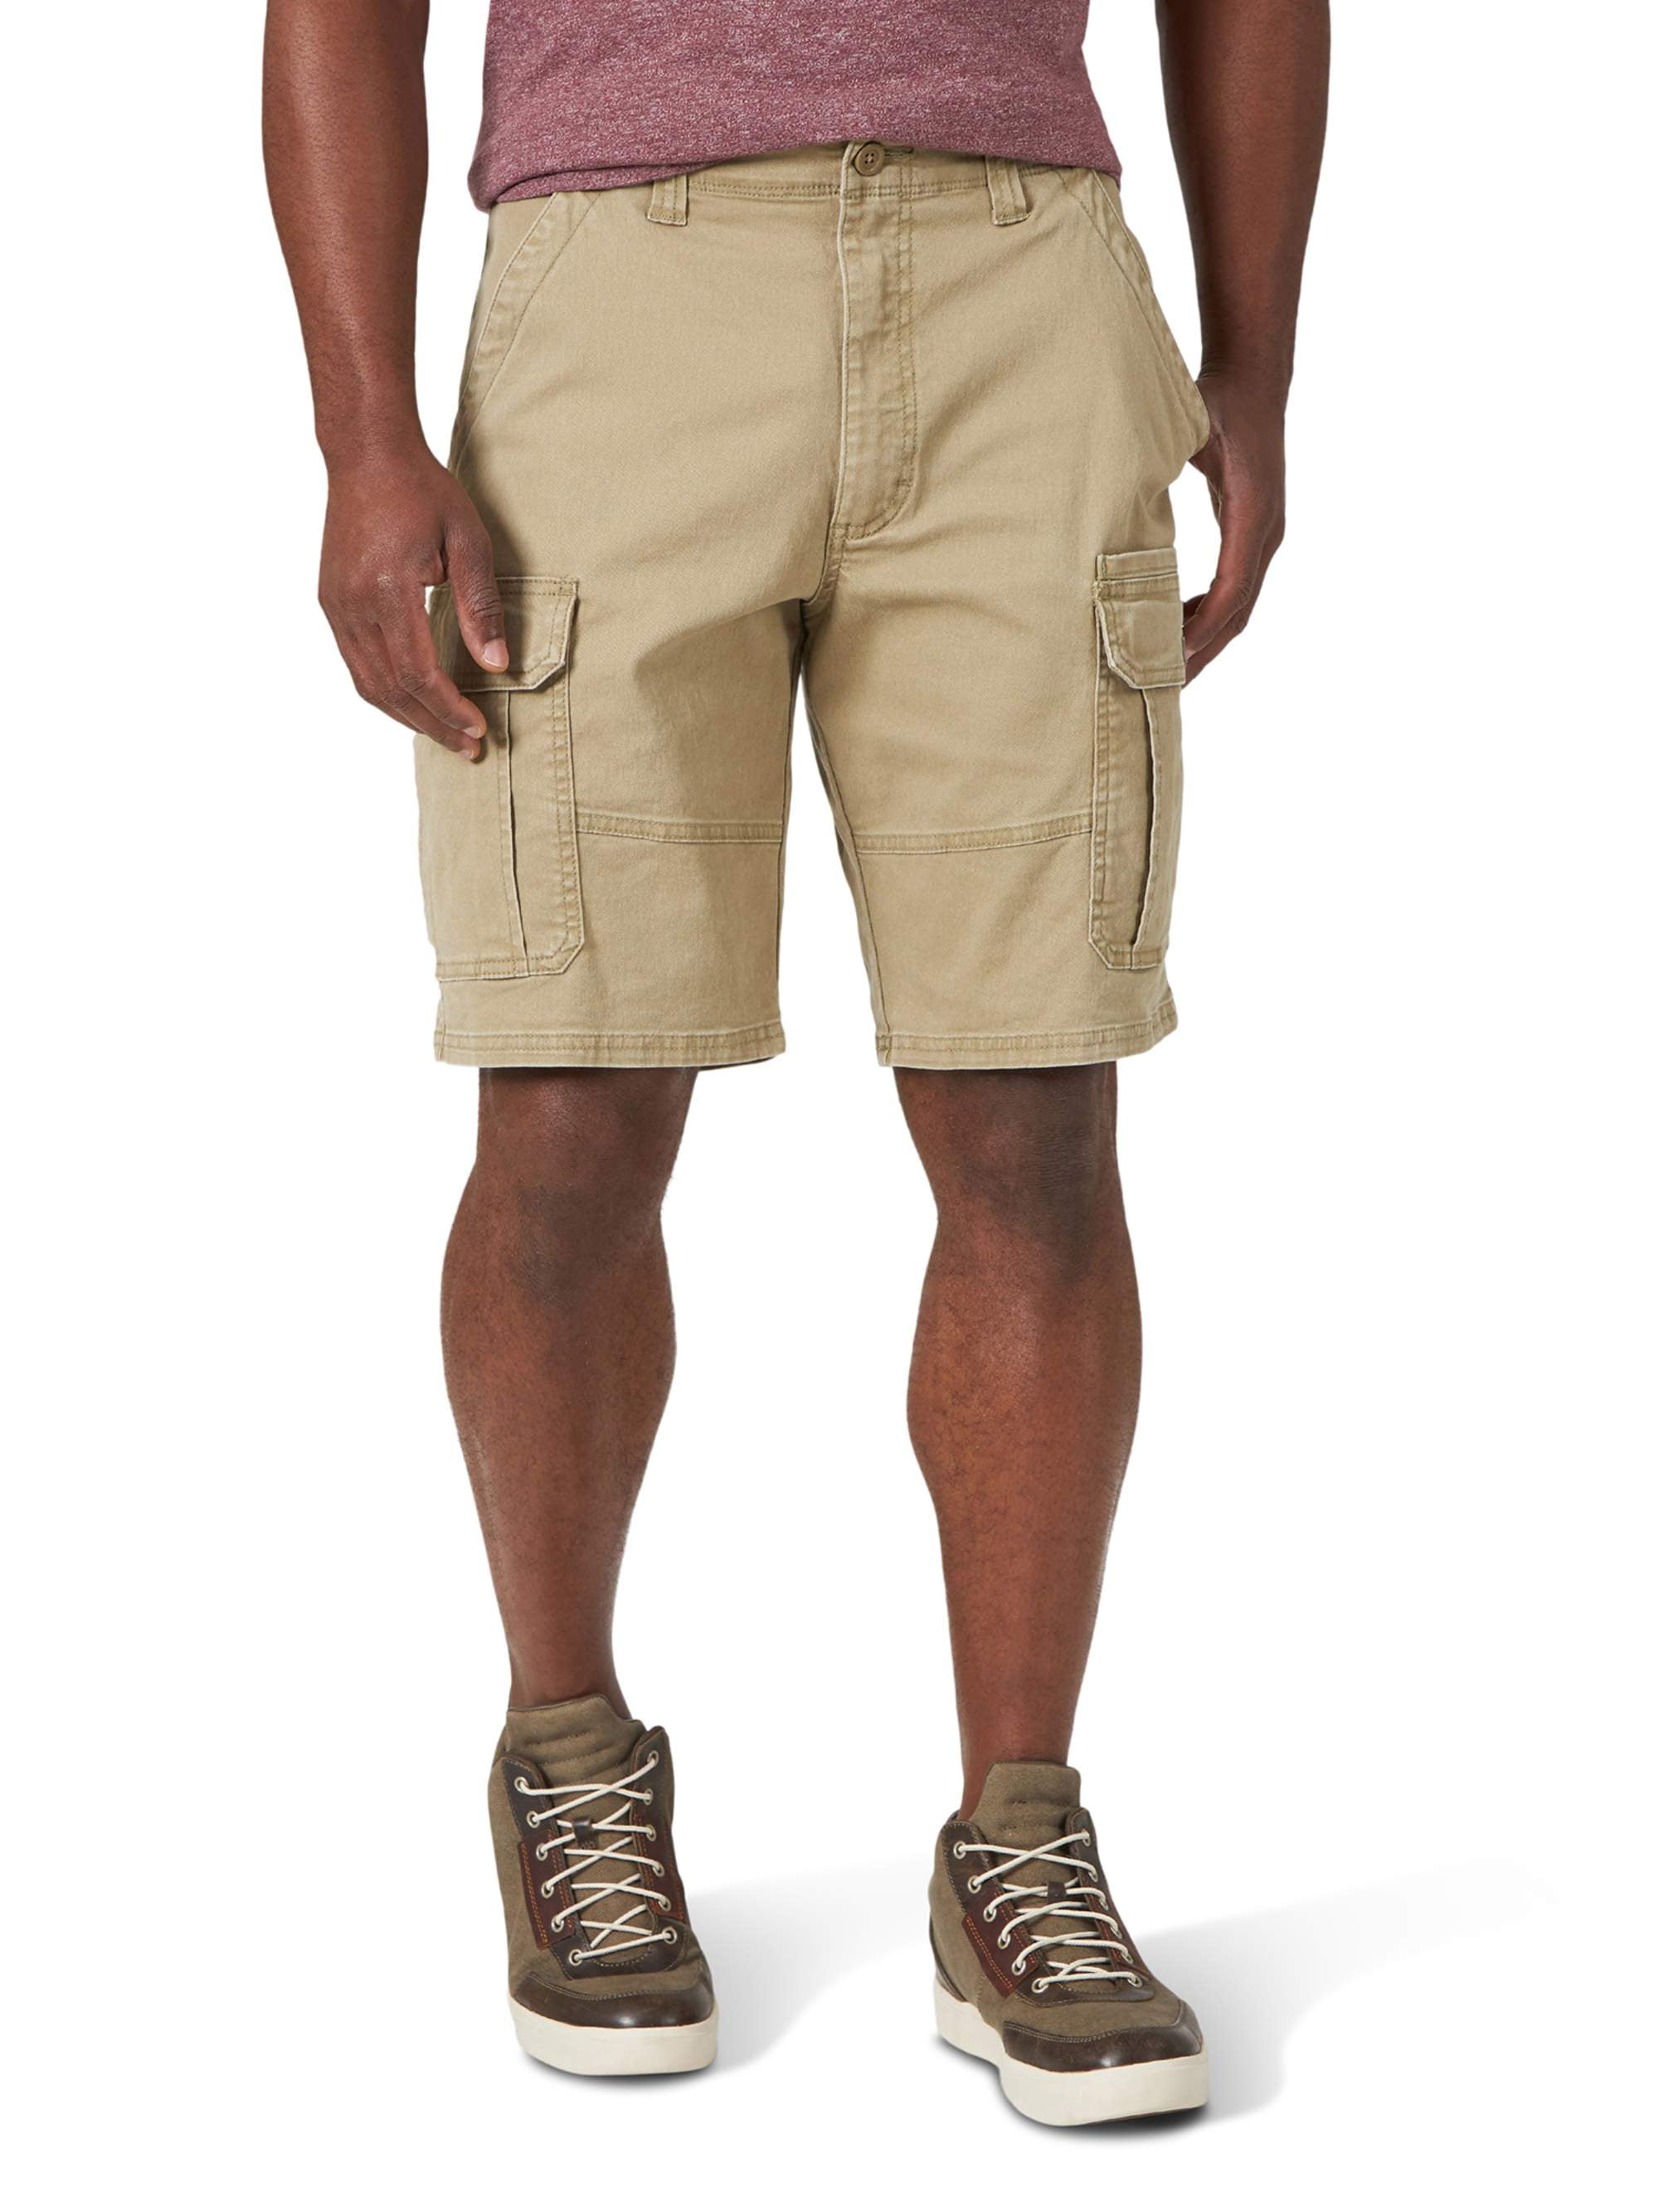 wrangler jean shorts mens